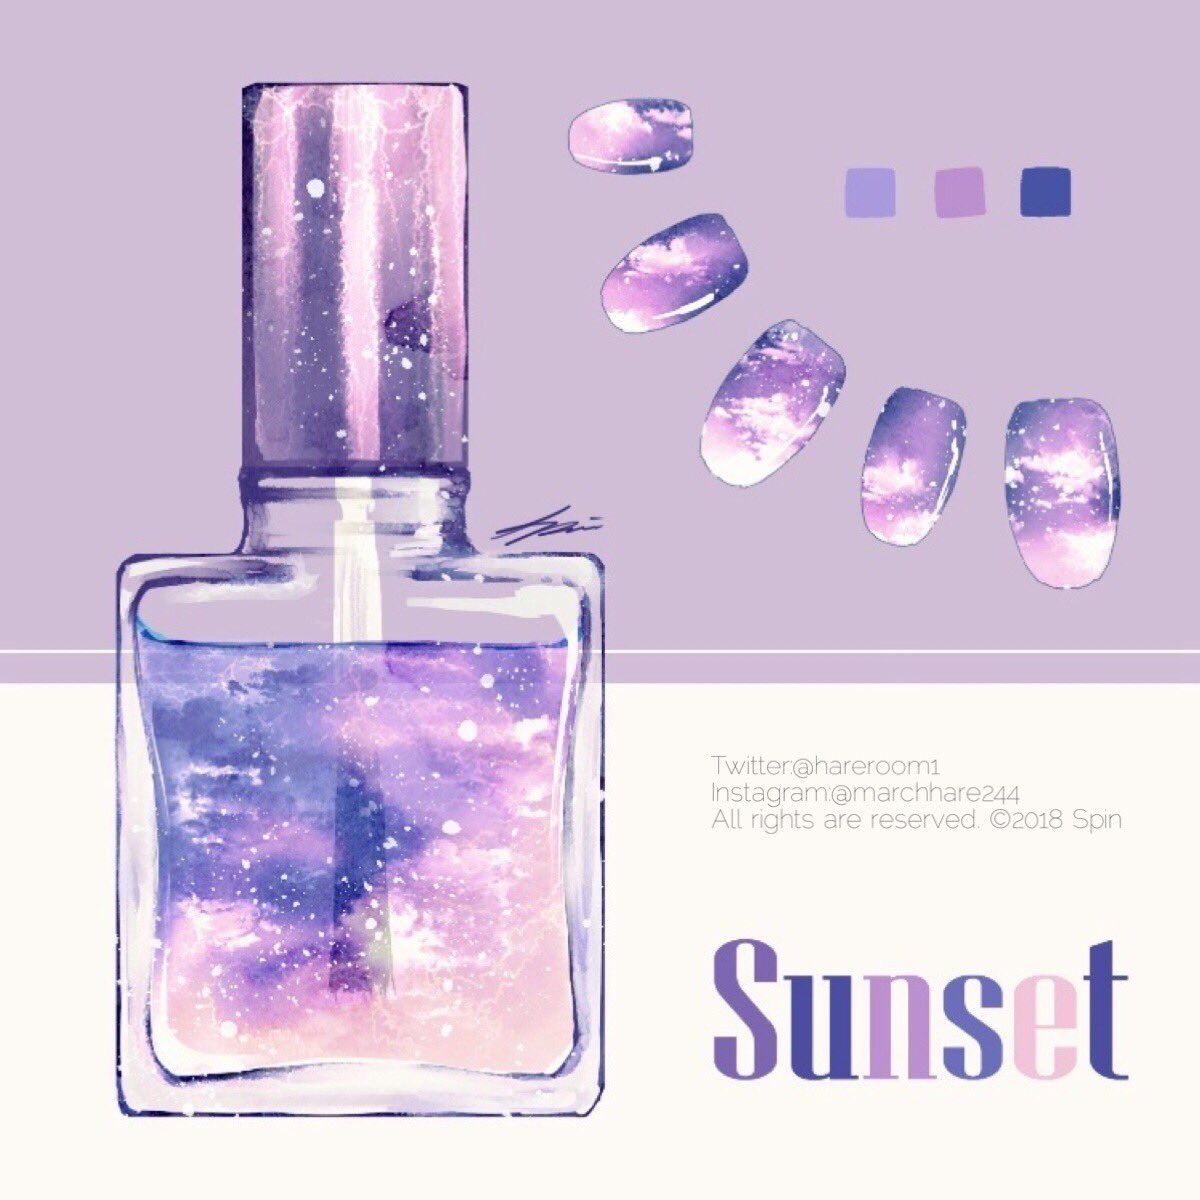 「SUNSET 」|Spin@3.25~26出版記念展/作品集2巻発売中のイラスト